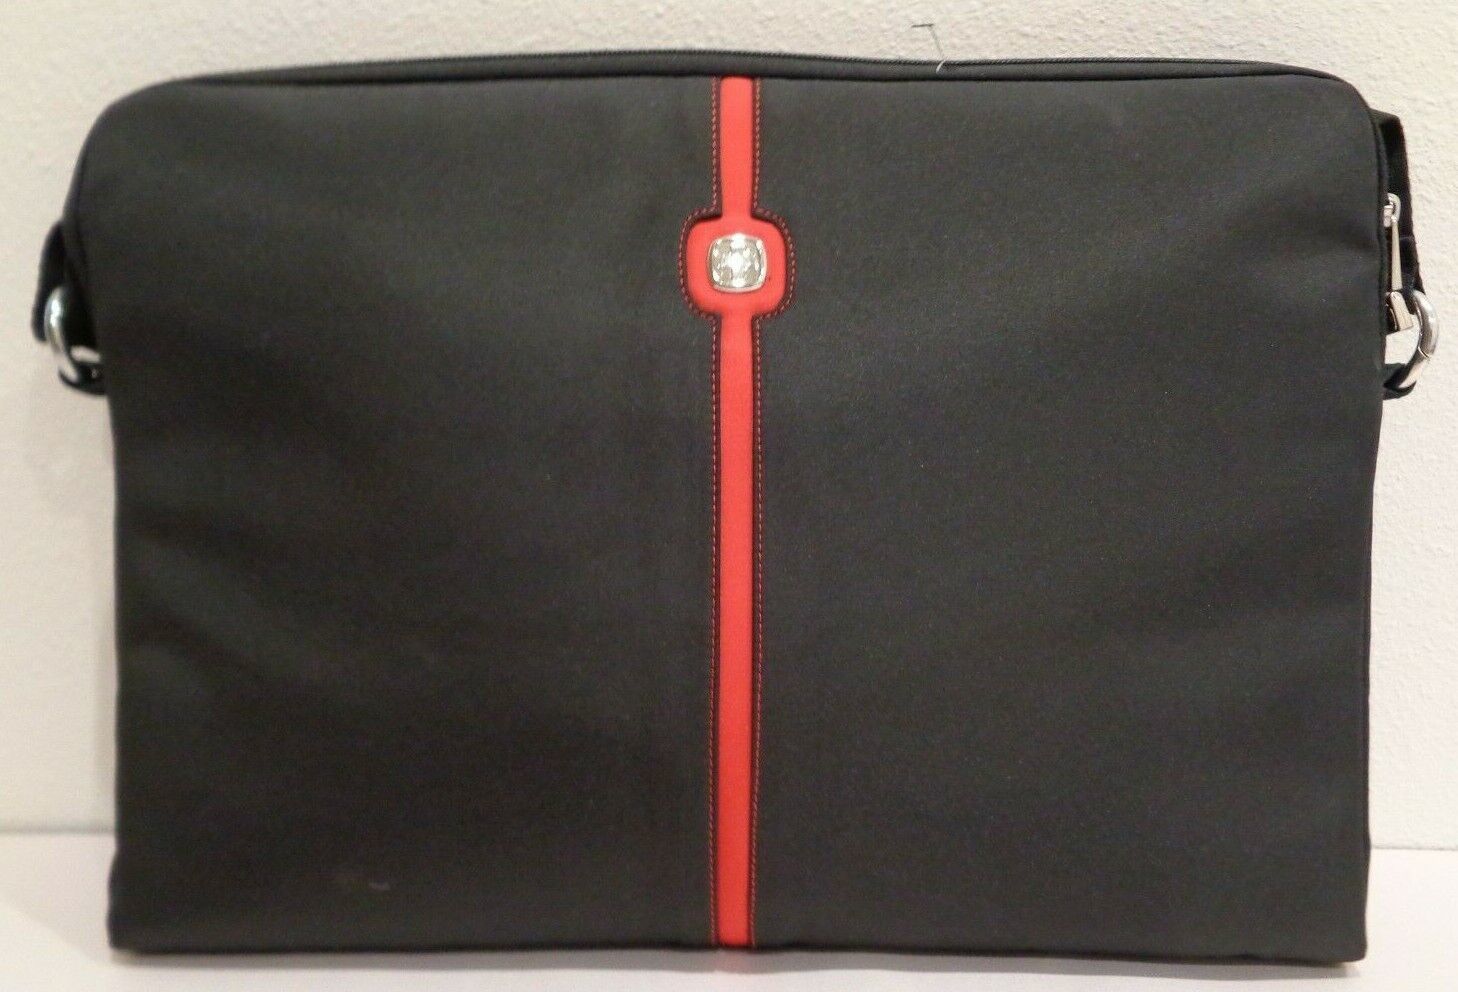 Wenger Swissgear MAYA 16 Inch New Laptop Sleeve Bag Case